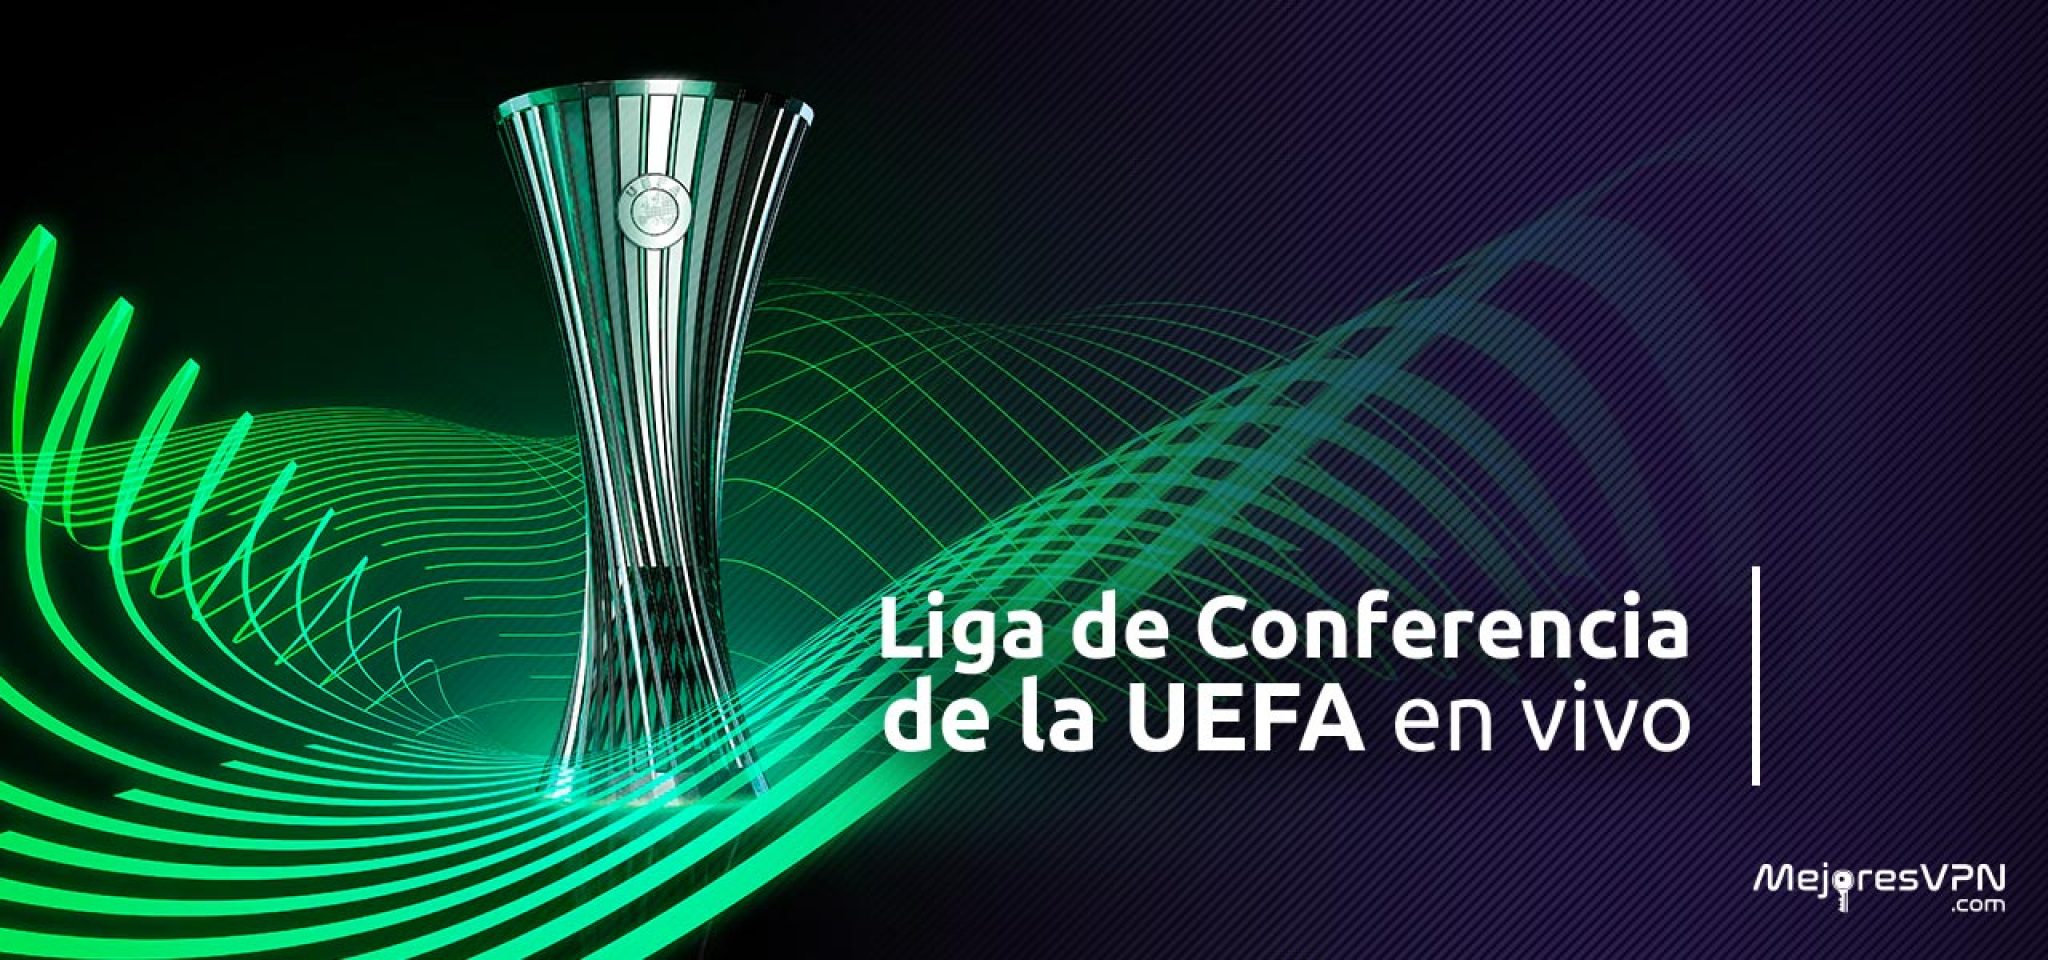 europa conference league tiebreaker